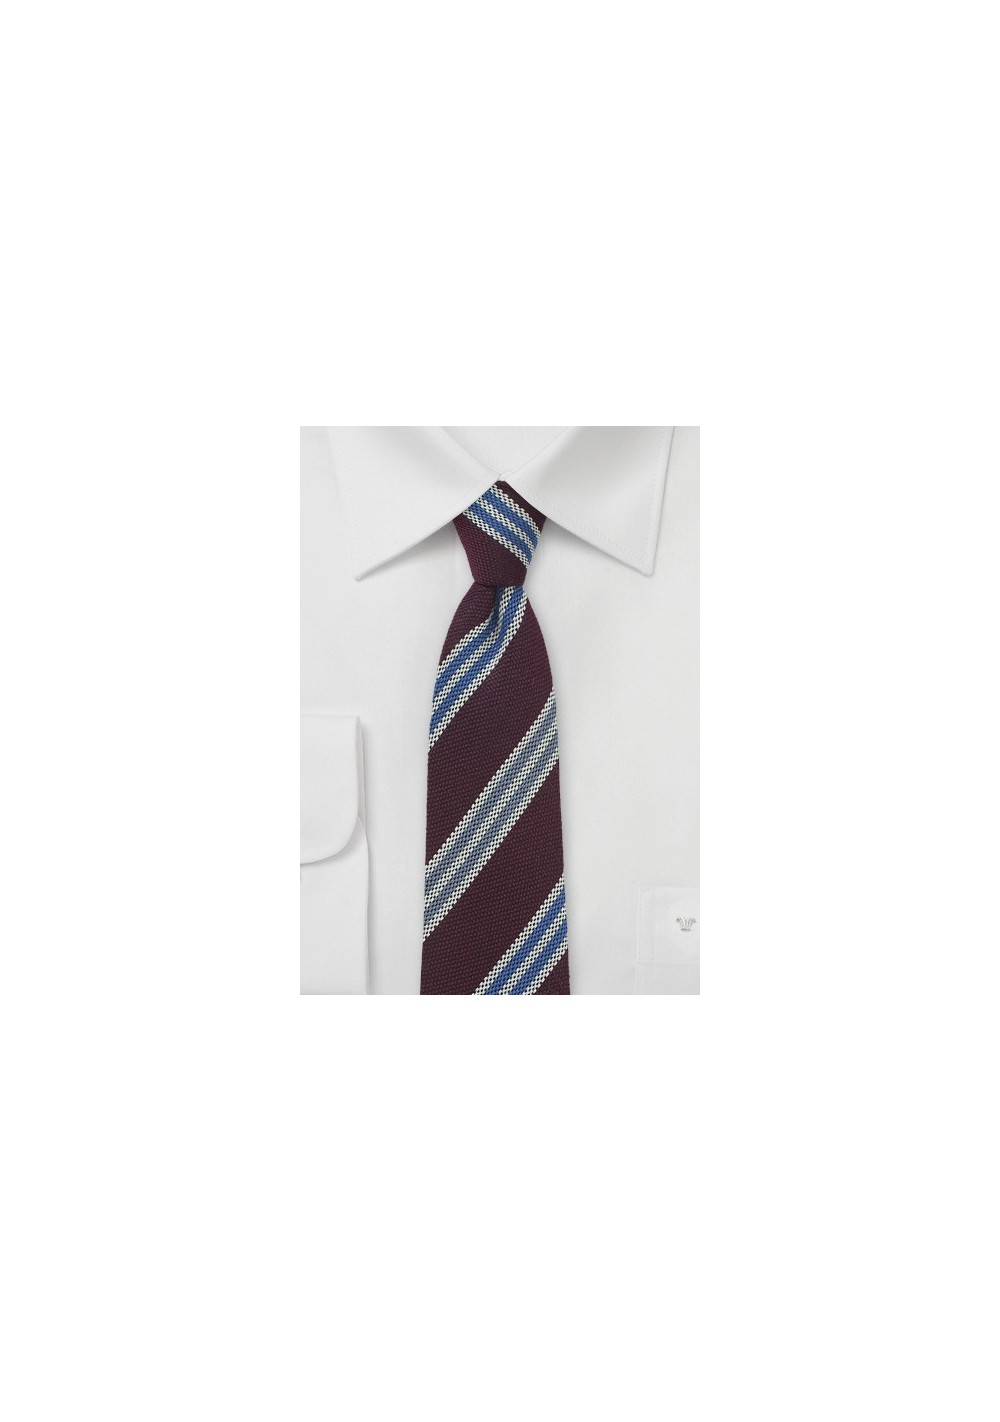 Burgundy Wool Tie with Blue Stripes